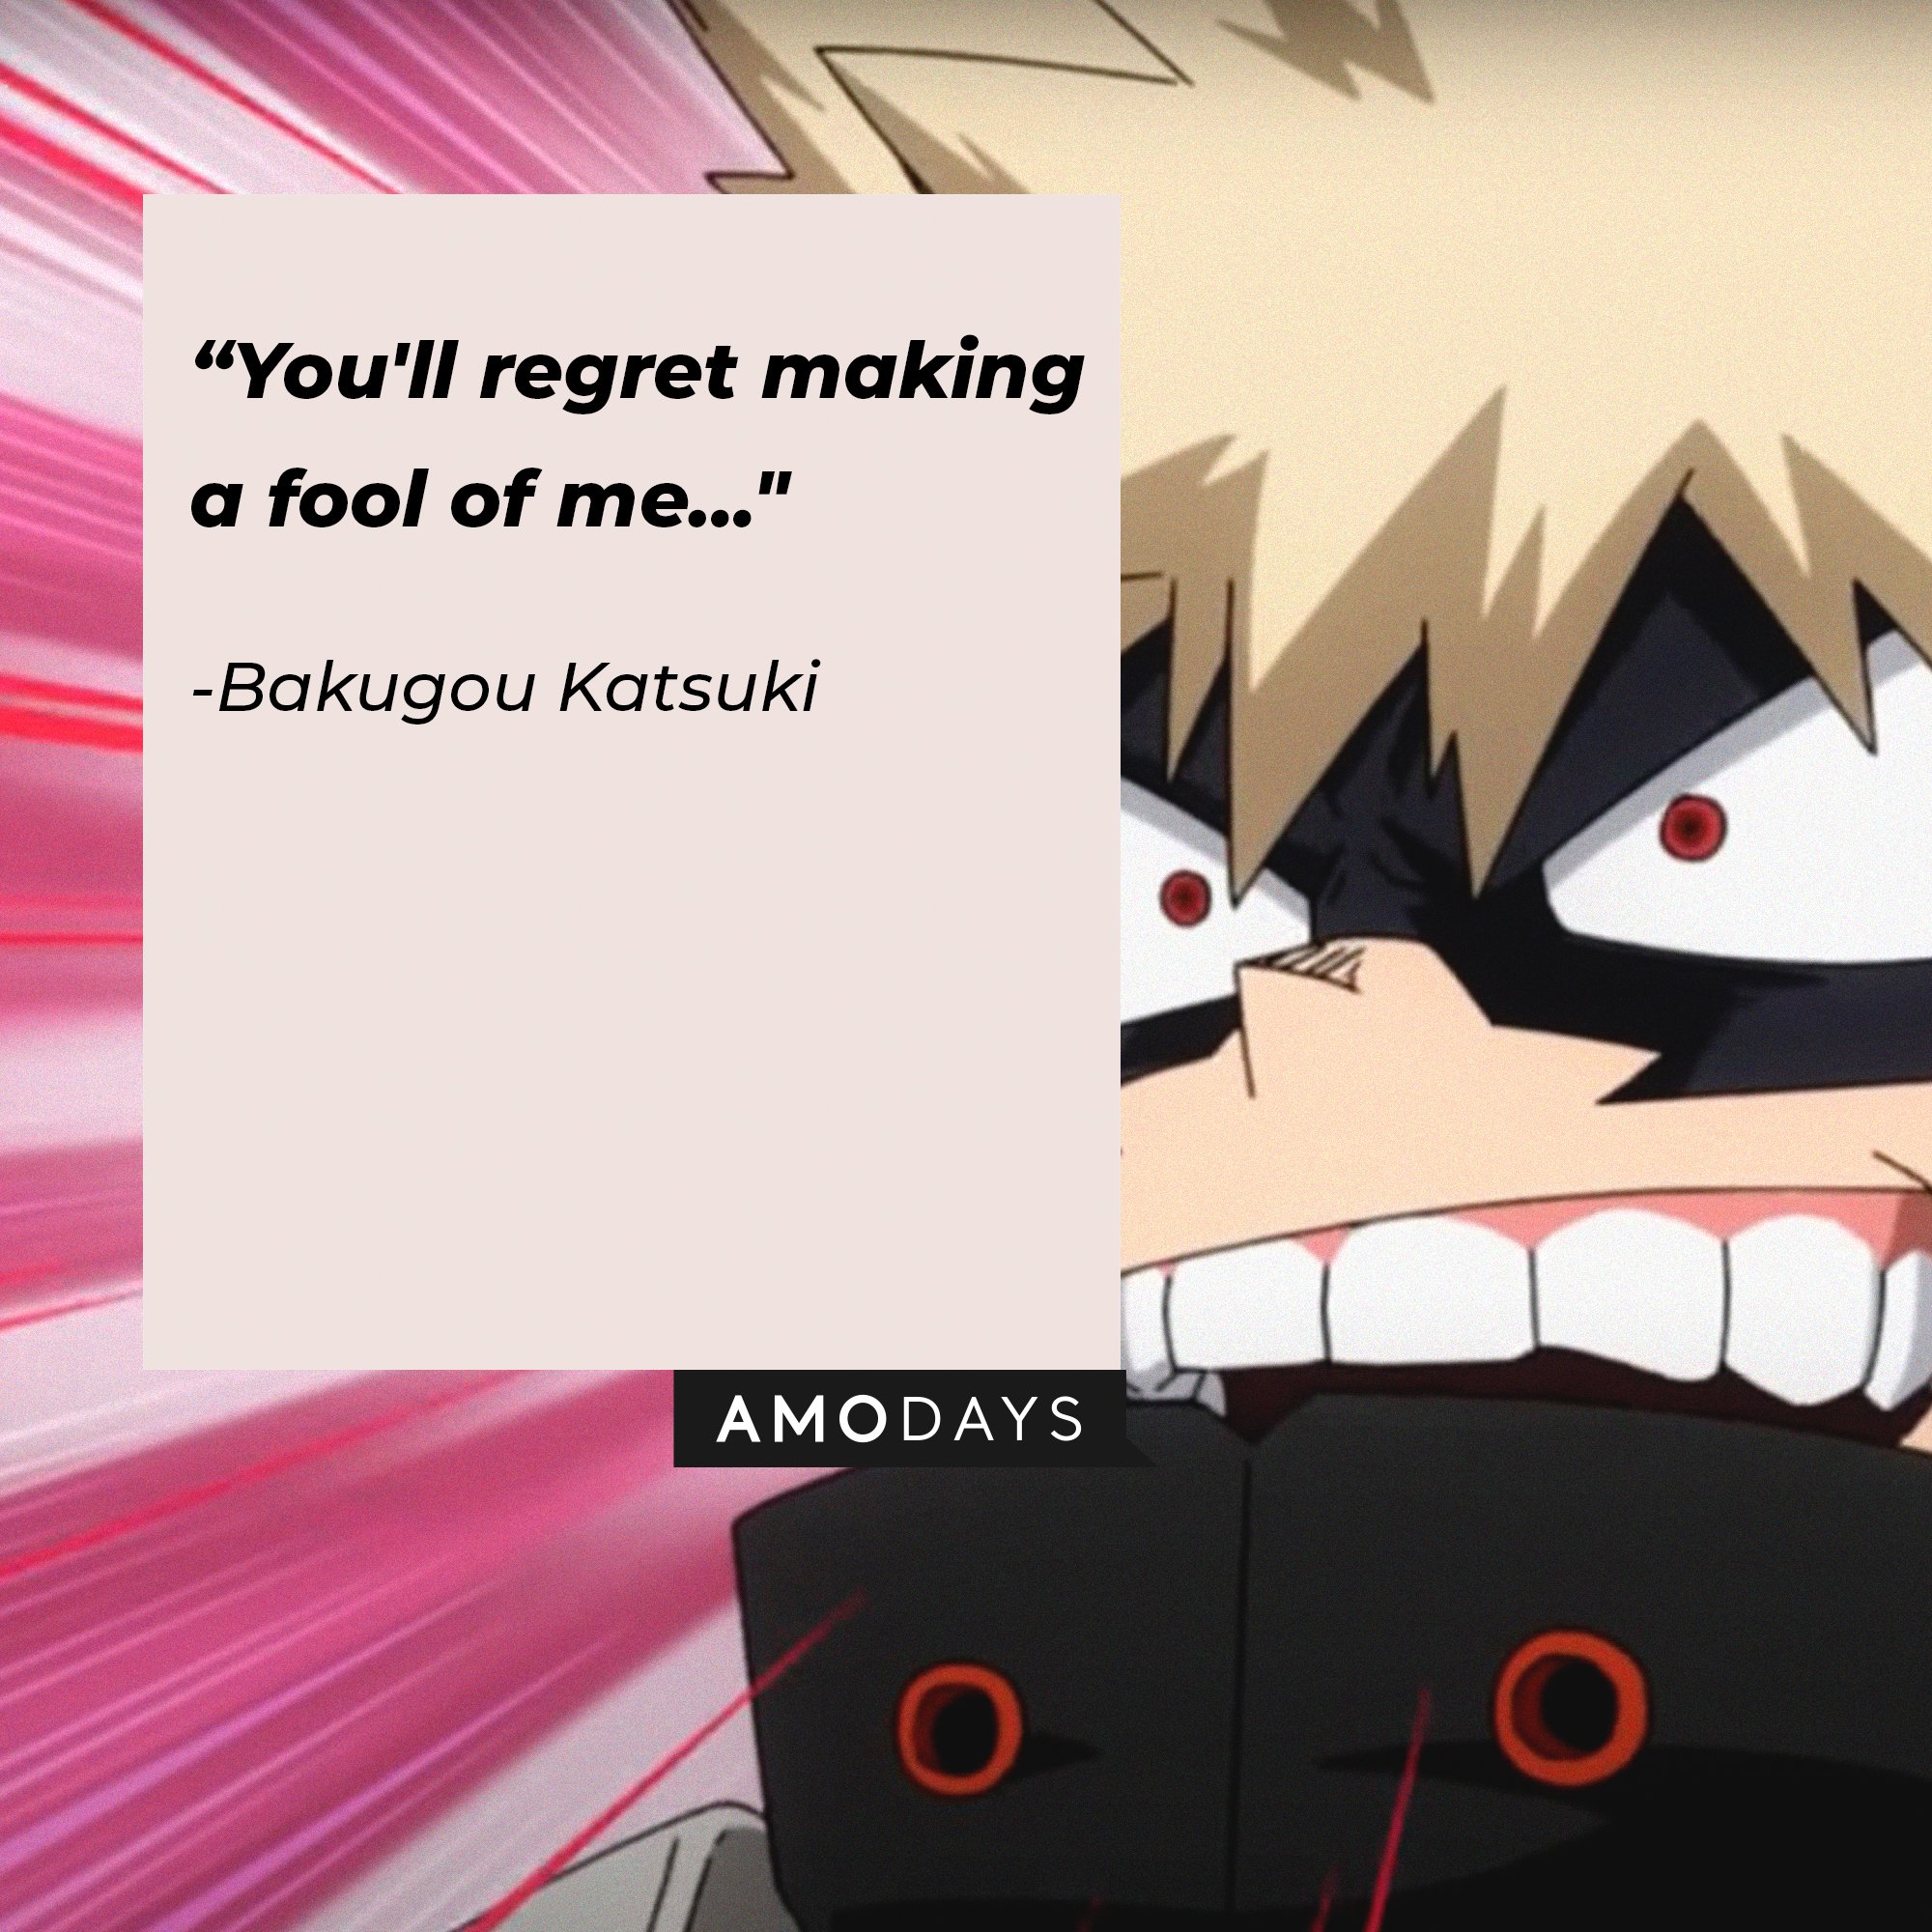 Bakugou Katsuki’s quote: “You'll regret making a fool of me…" | Image: AmoDays